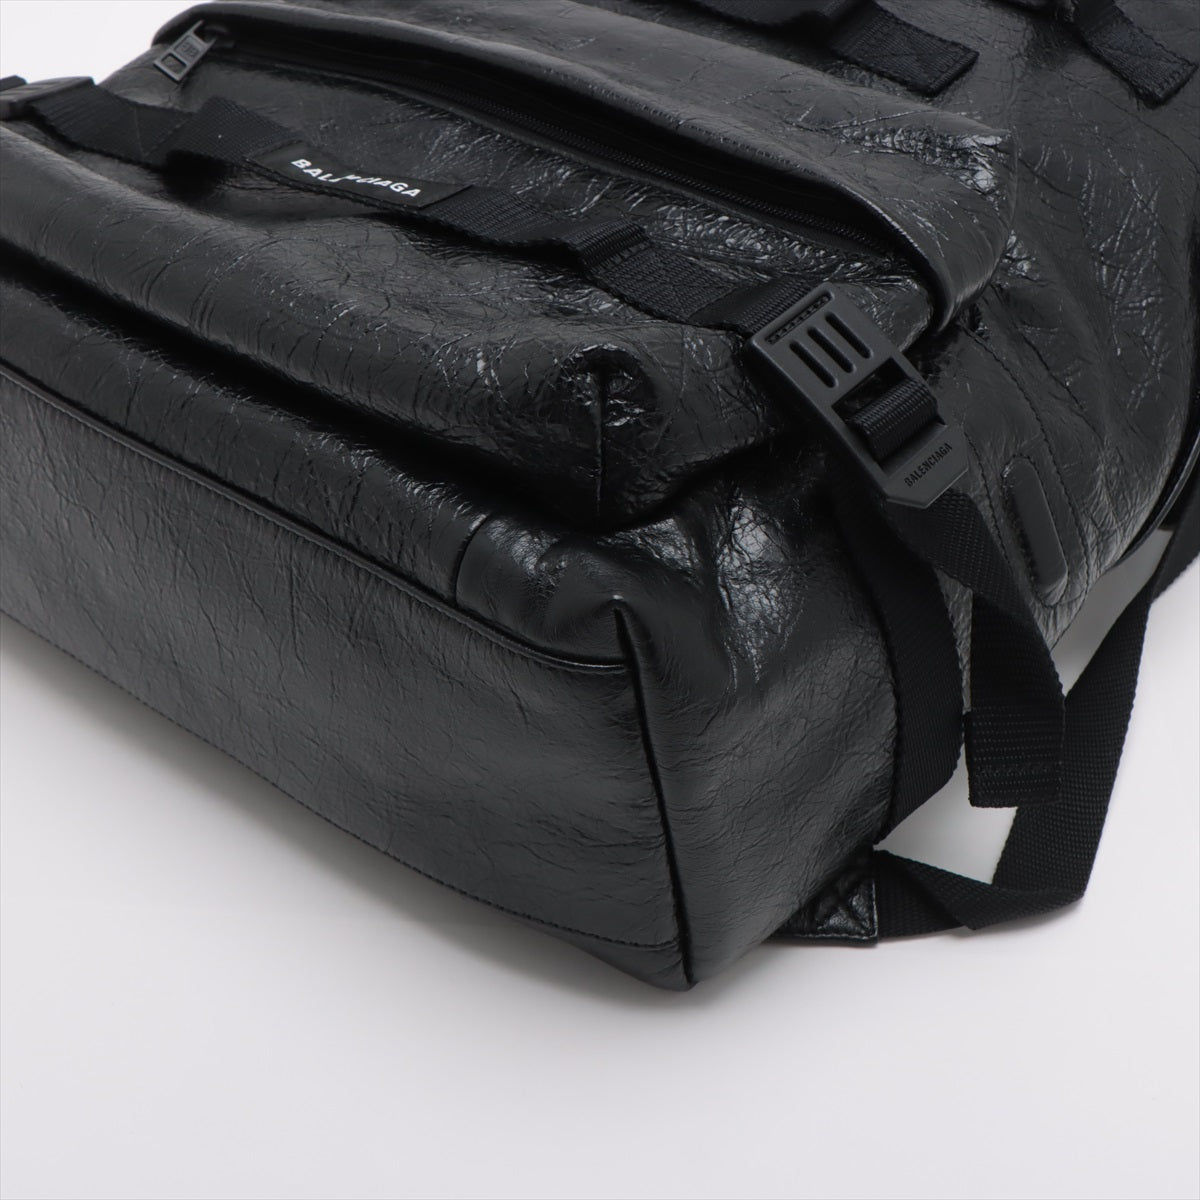 Balenciaga Army Leather Backpack/Rack Black 644033